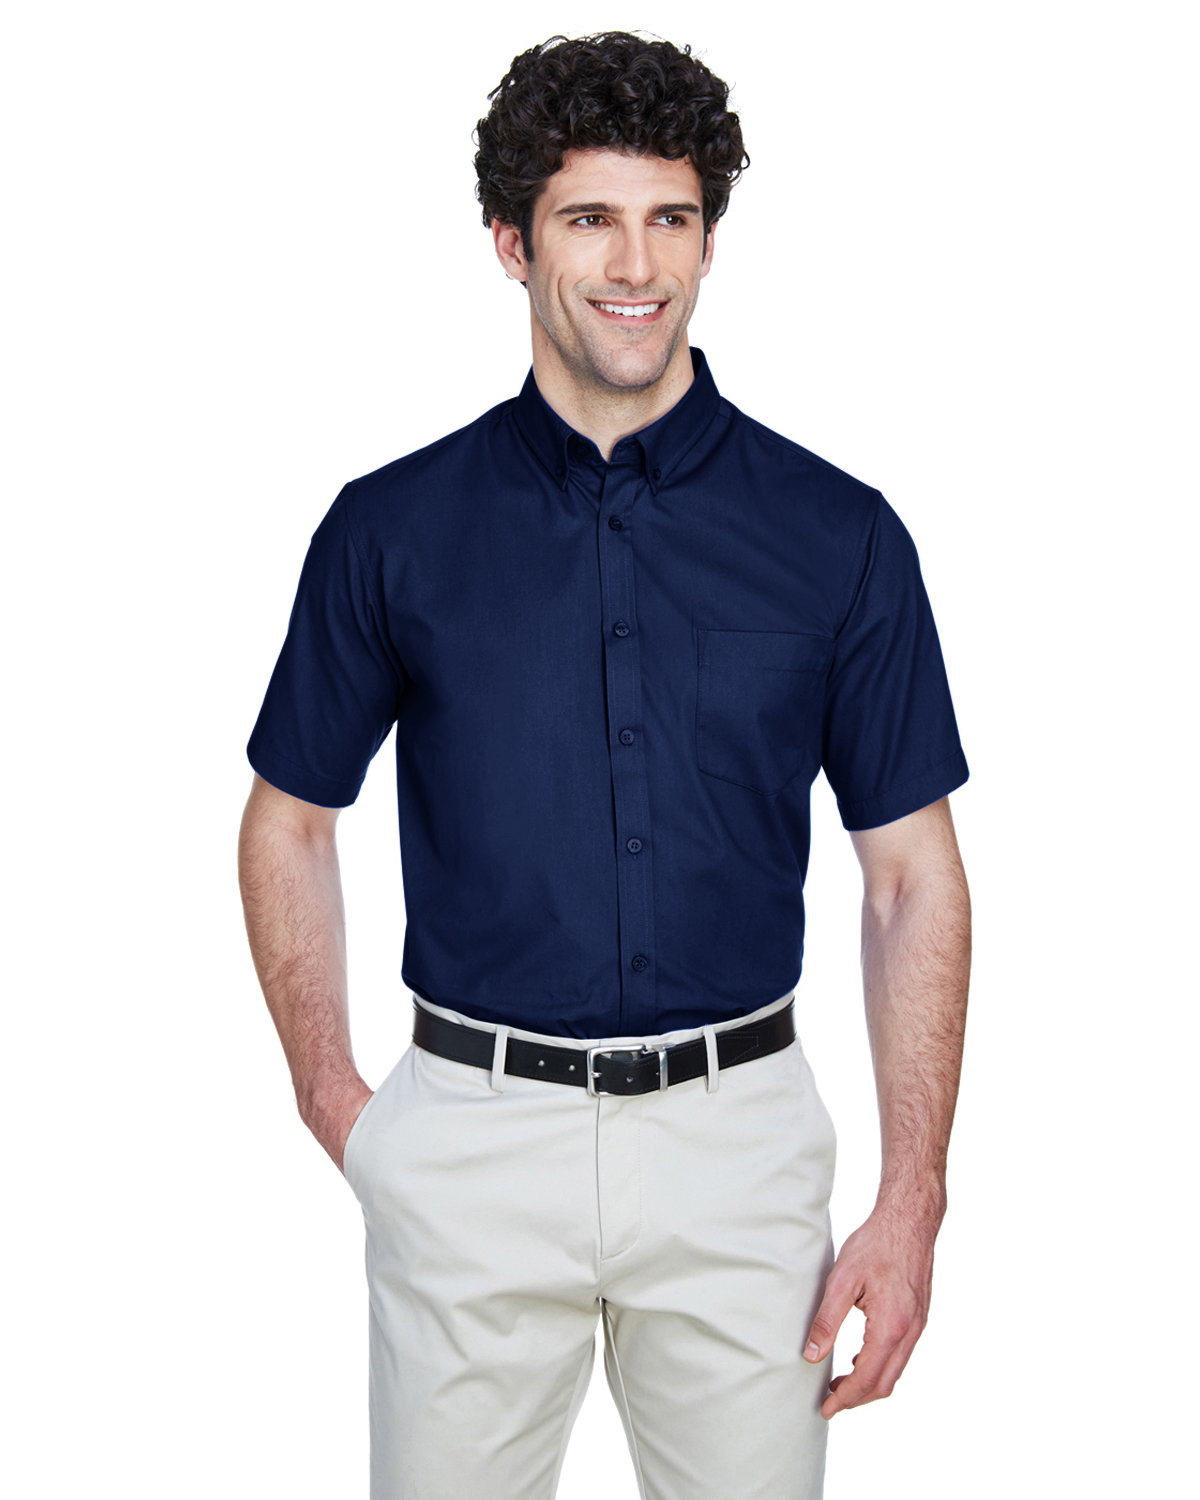 Core 365 Men's Tall Optimum Short-Sleeve Twill Shirt CLASSIC NAVY 